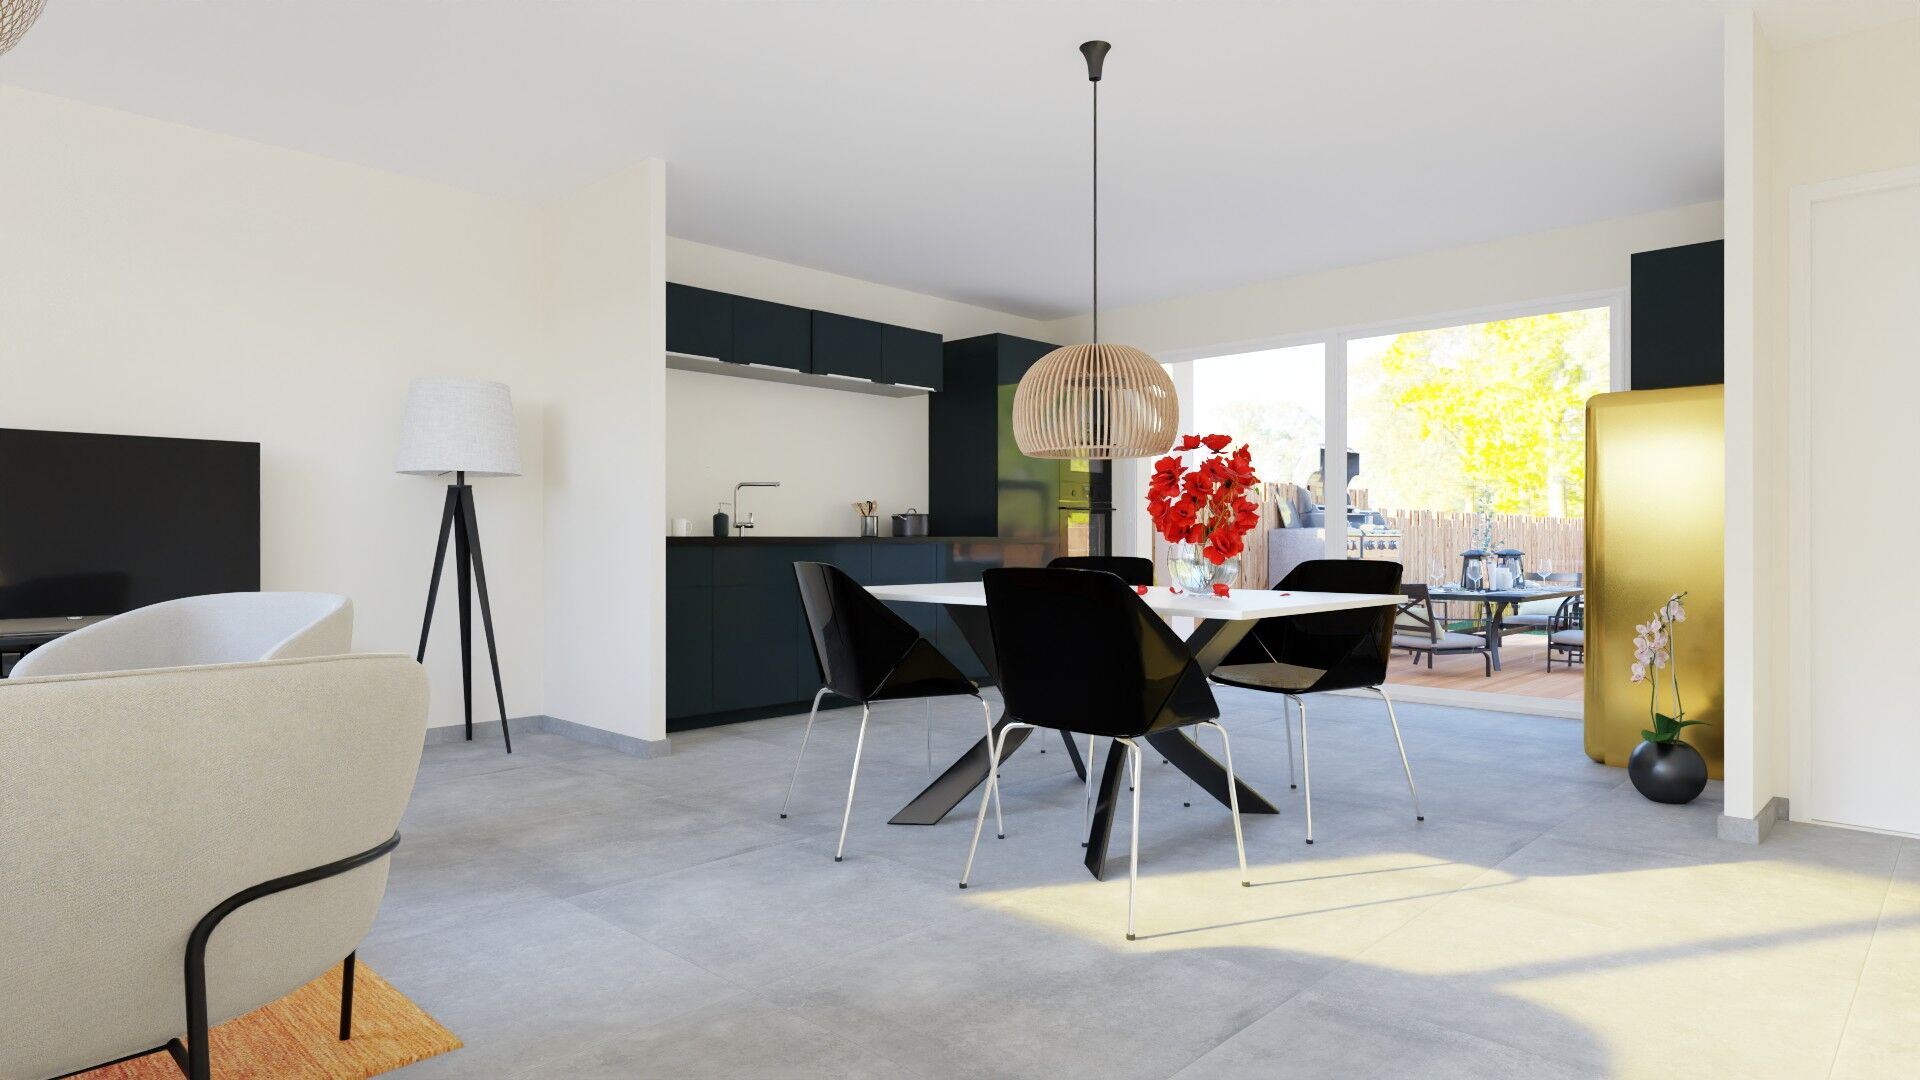 Vente Maison 80 m² à Saint-Just-Saint-Rambert 252 500 €